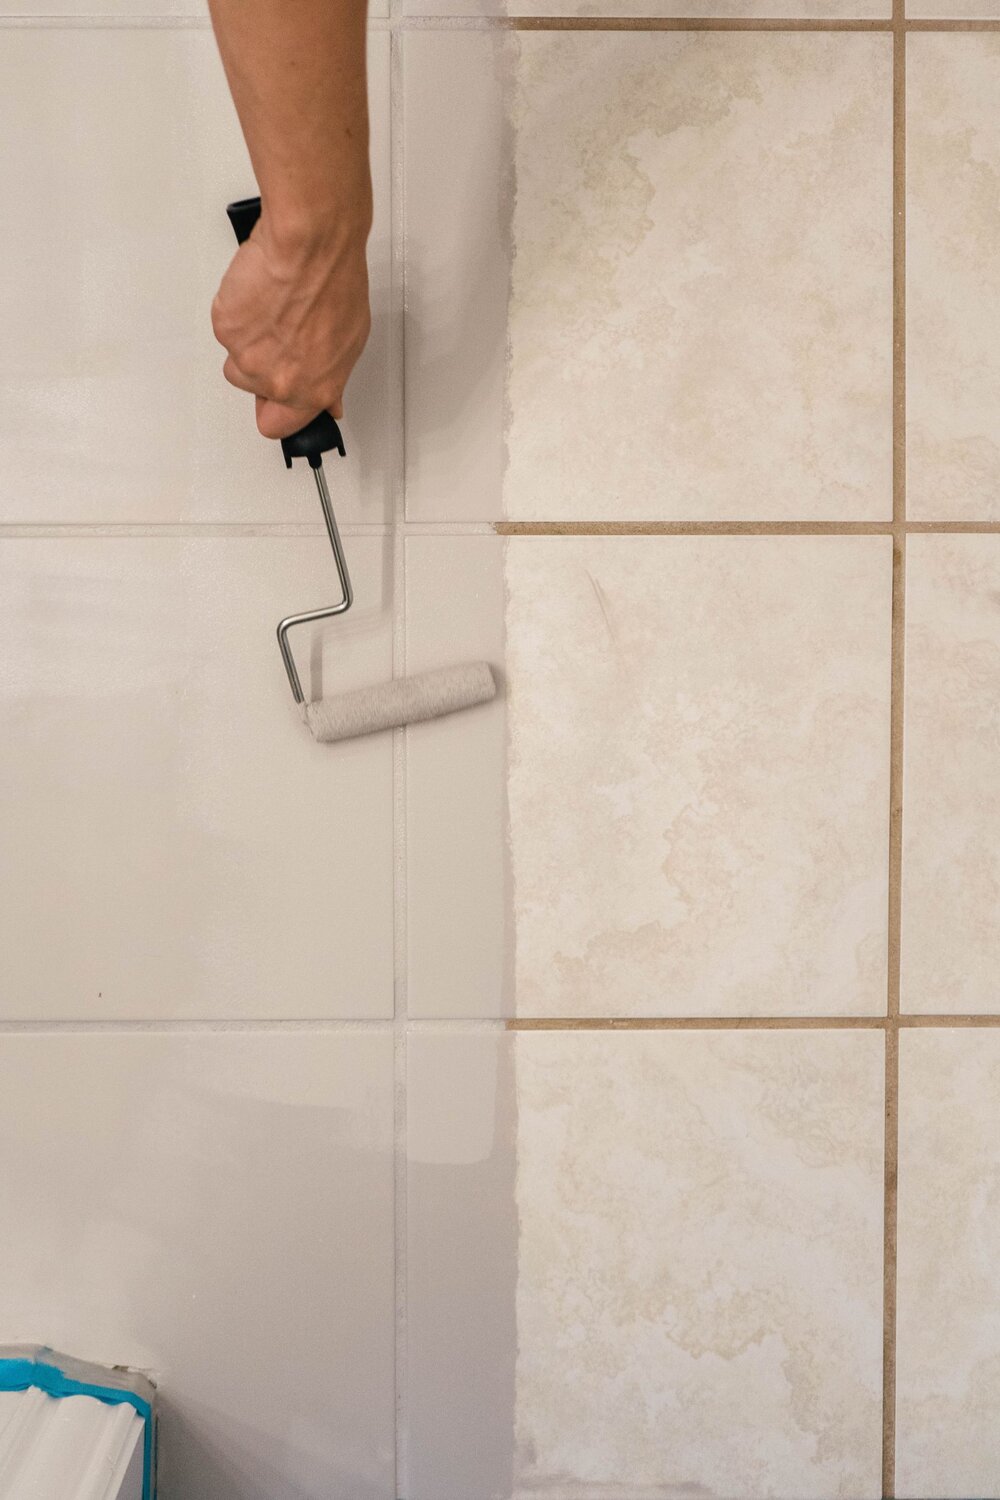 Diy How To Paint Ceramic Floor Tile, Paint Over Bathroom Tile Floor